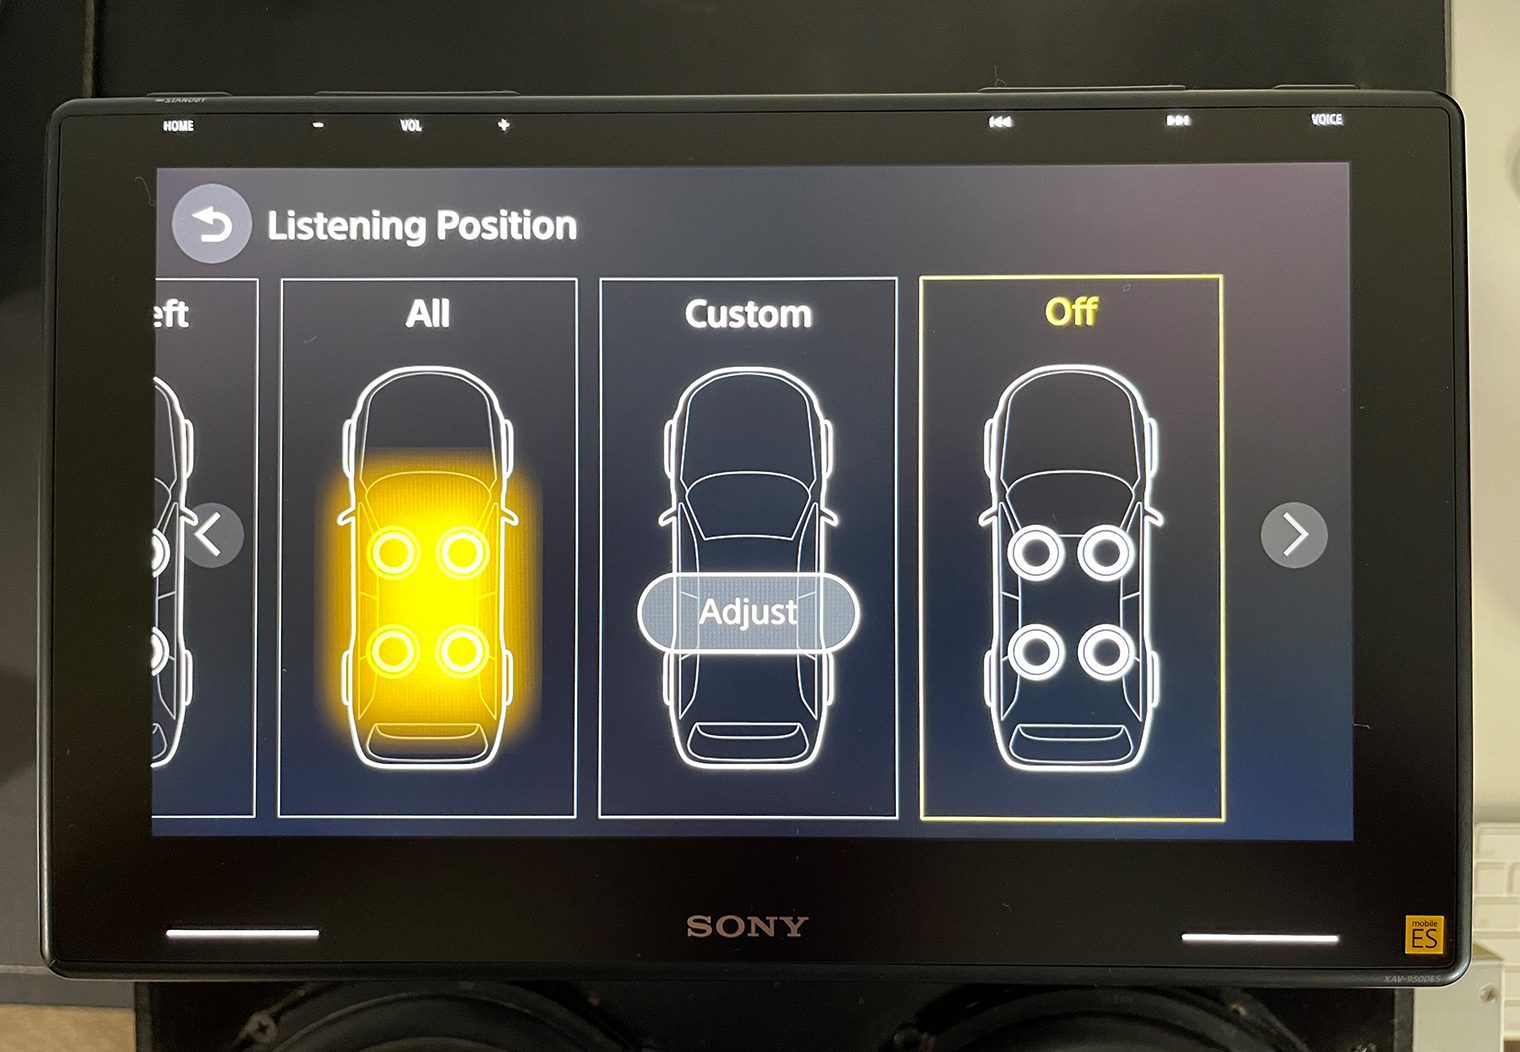 Sony XAV-9500ES listening positions for all, custom and off